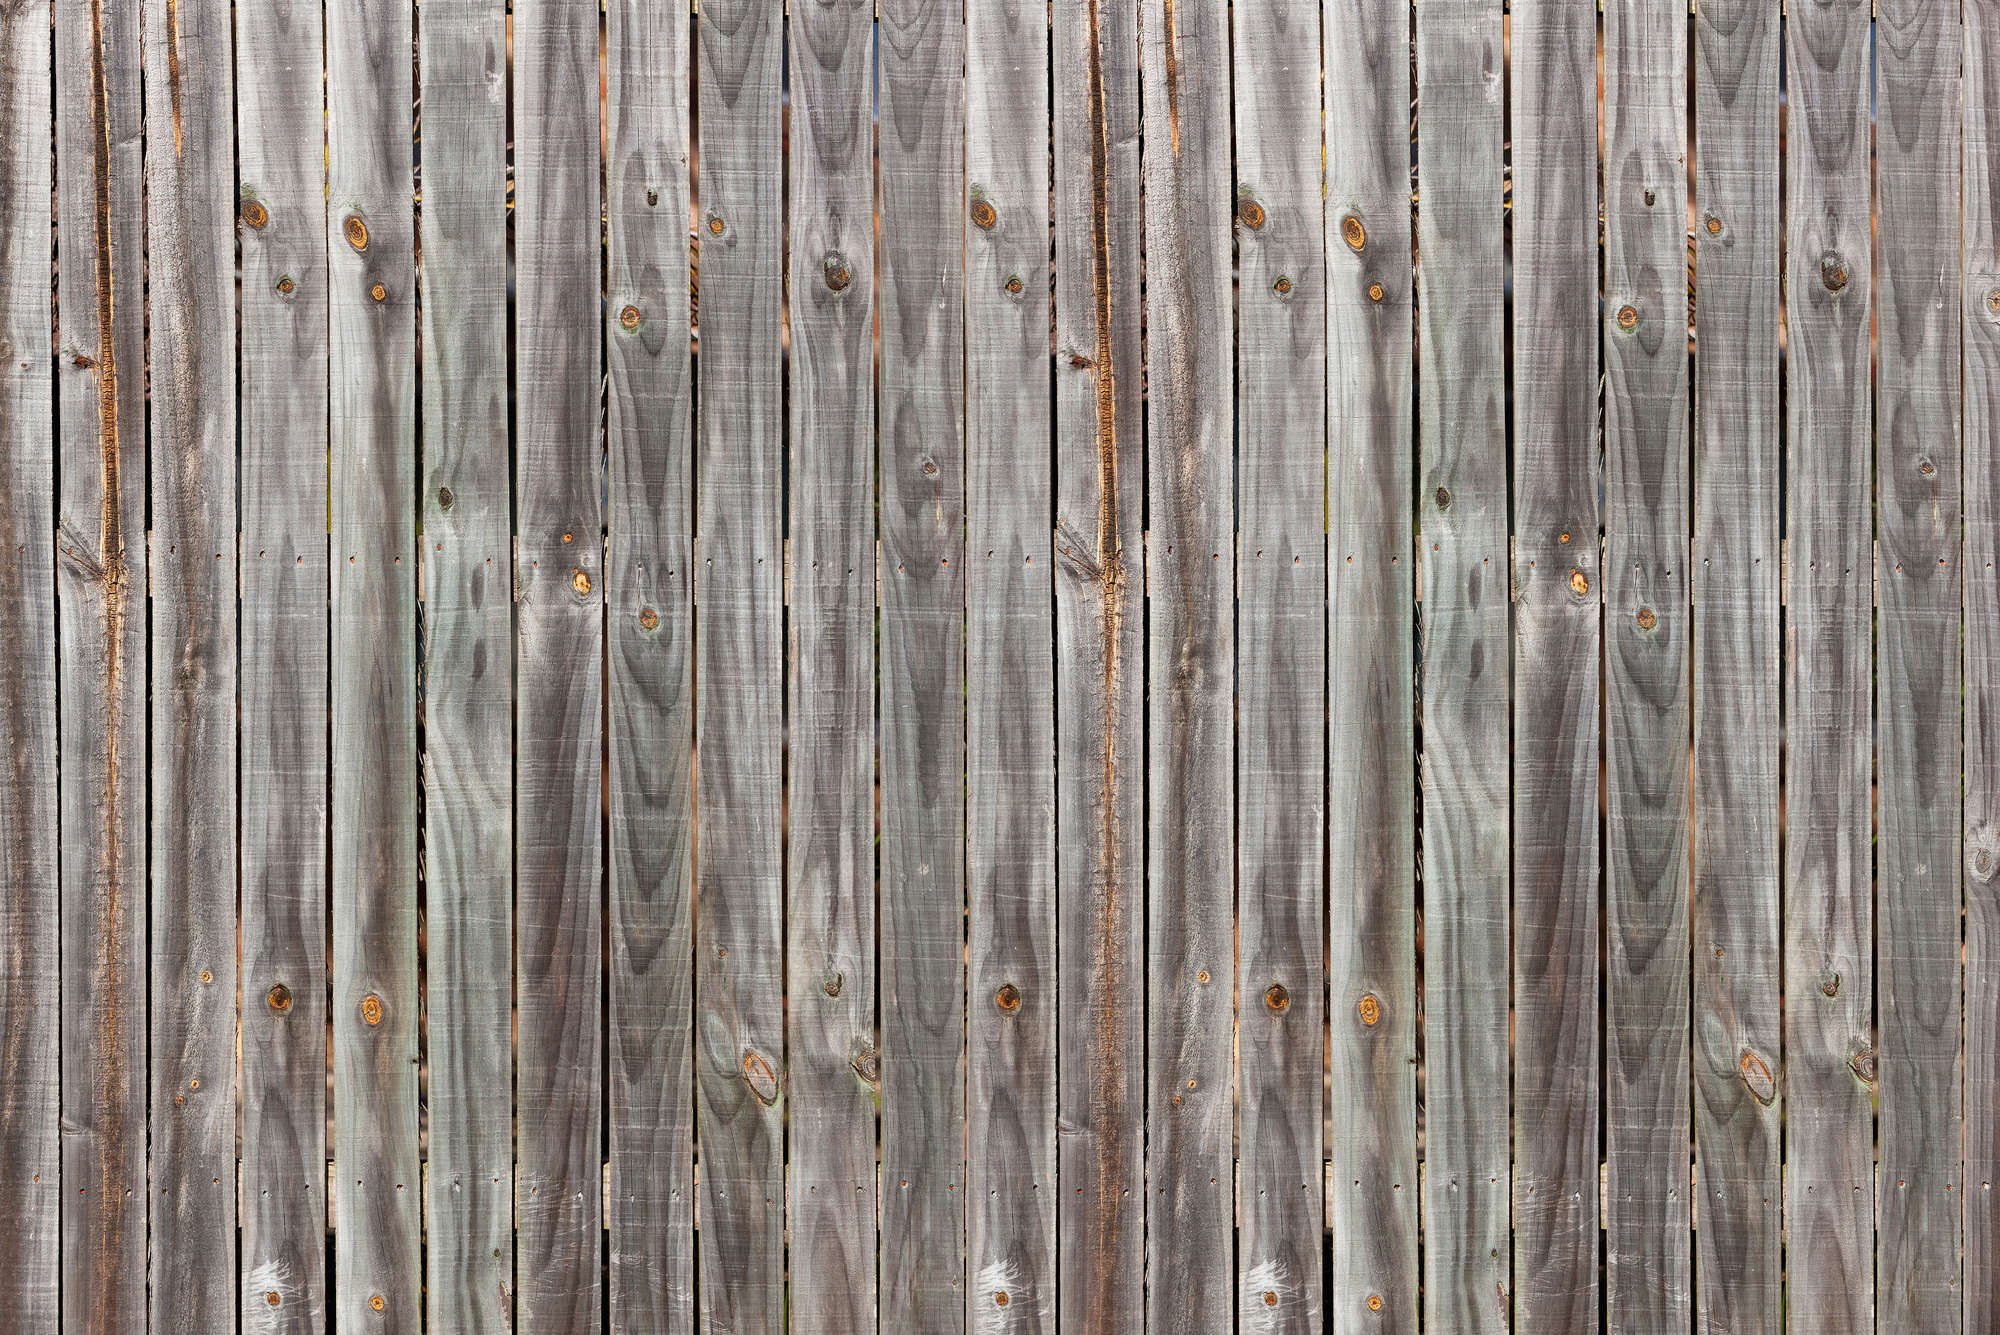             Wood dark - board wall rustic, board fence weathered
        